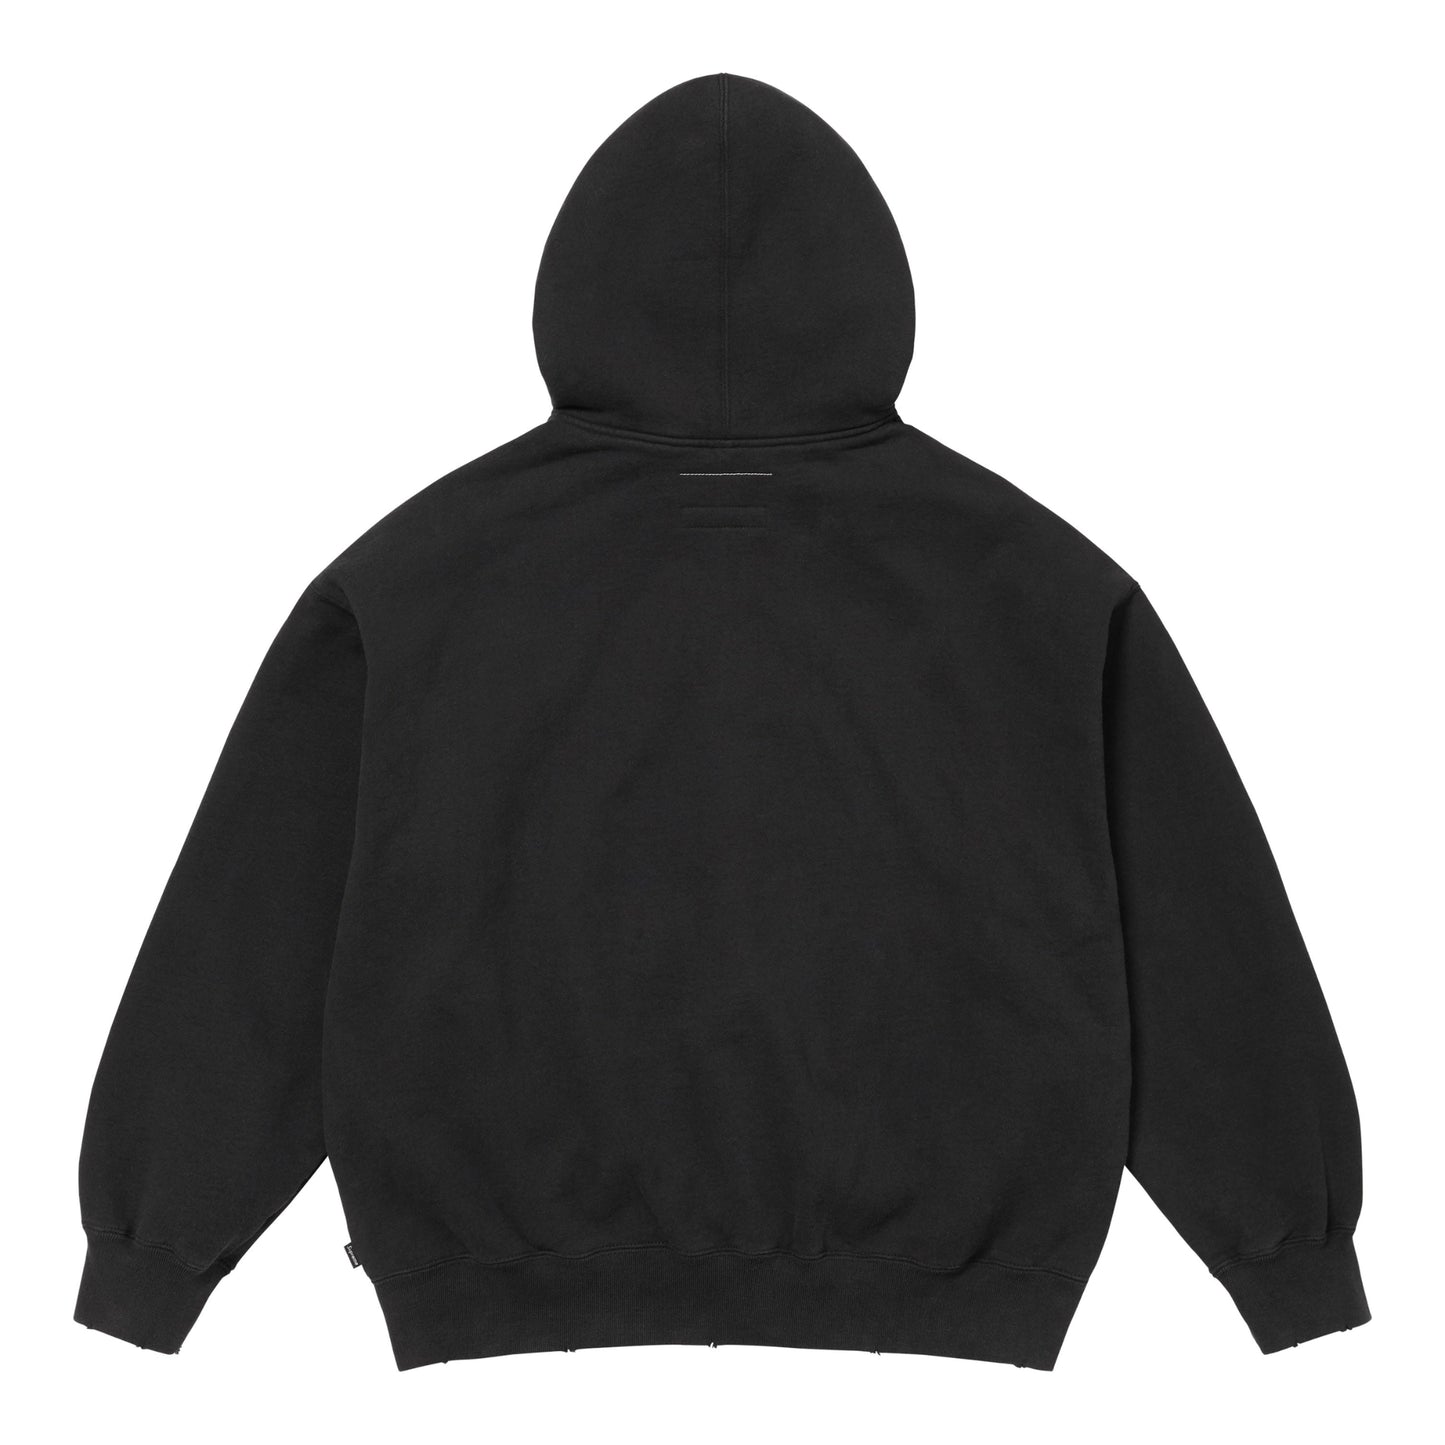 Supreme x MM6 Maison Margiela Zip Up Hooded Sweatshirt Black